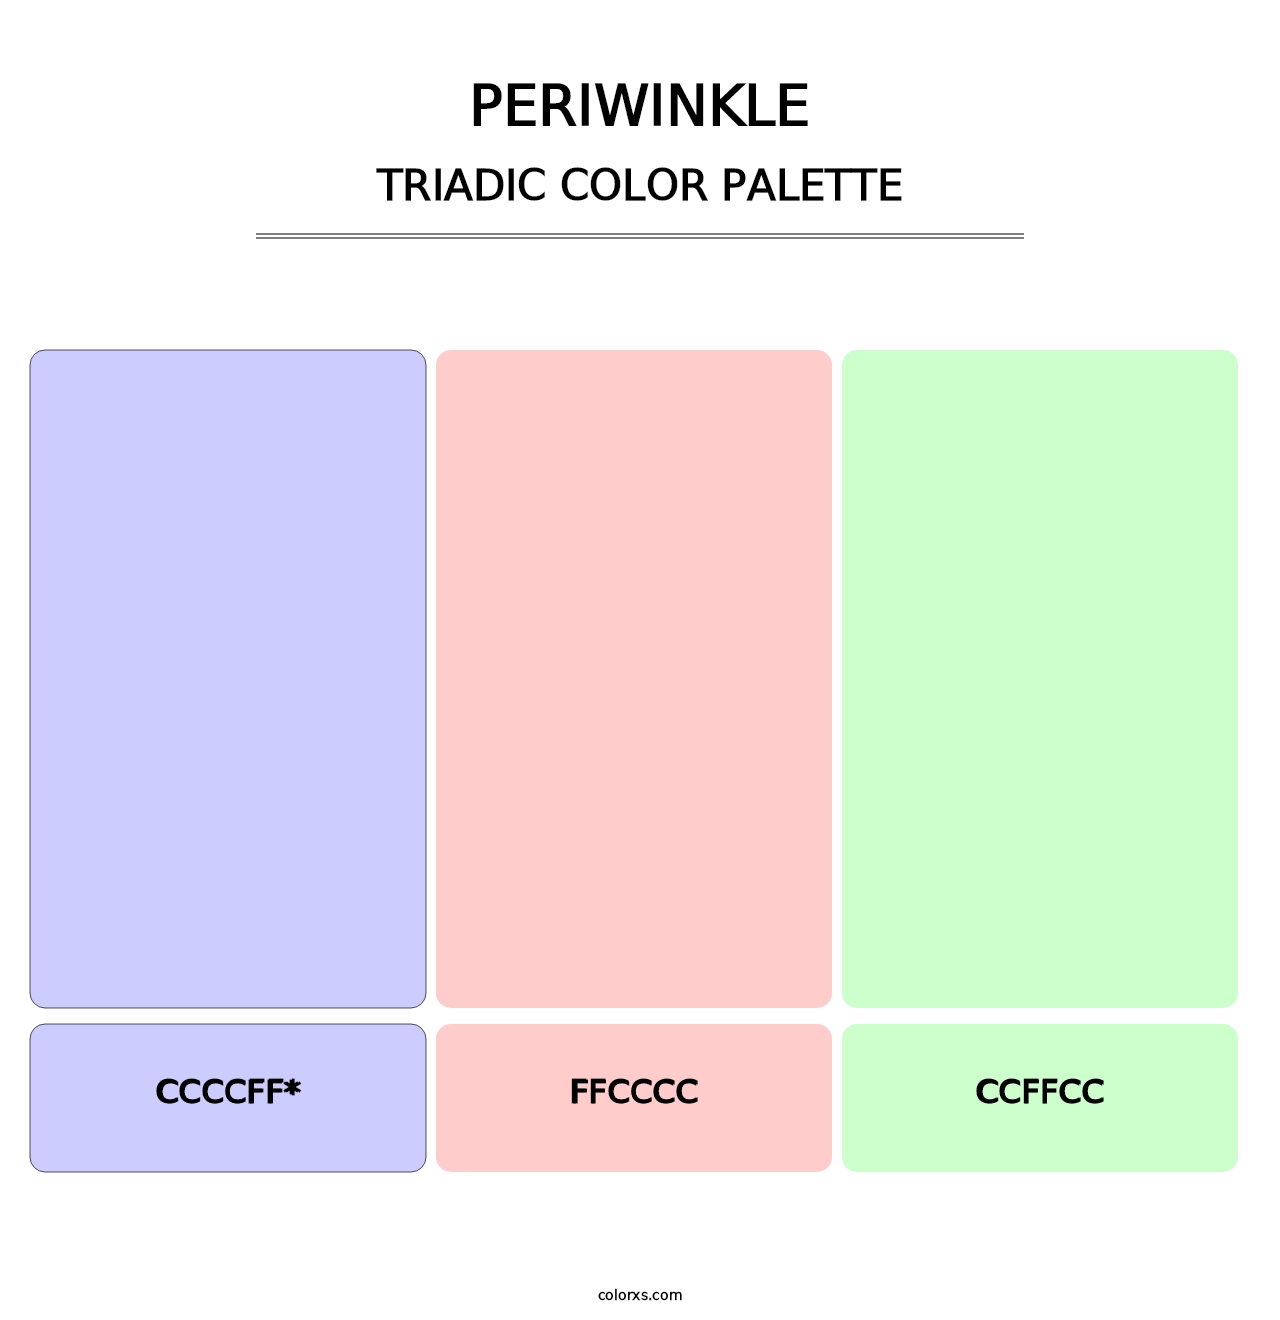 Periwinkle - Triadic Color Palette